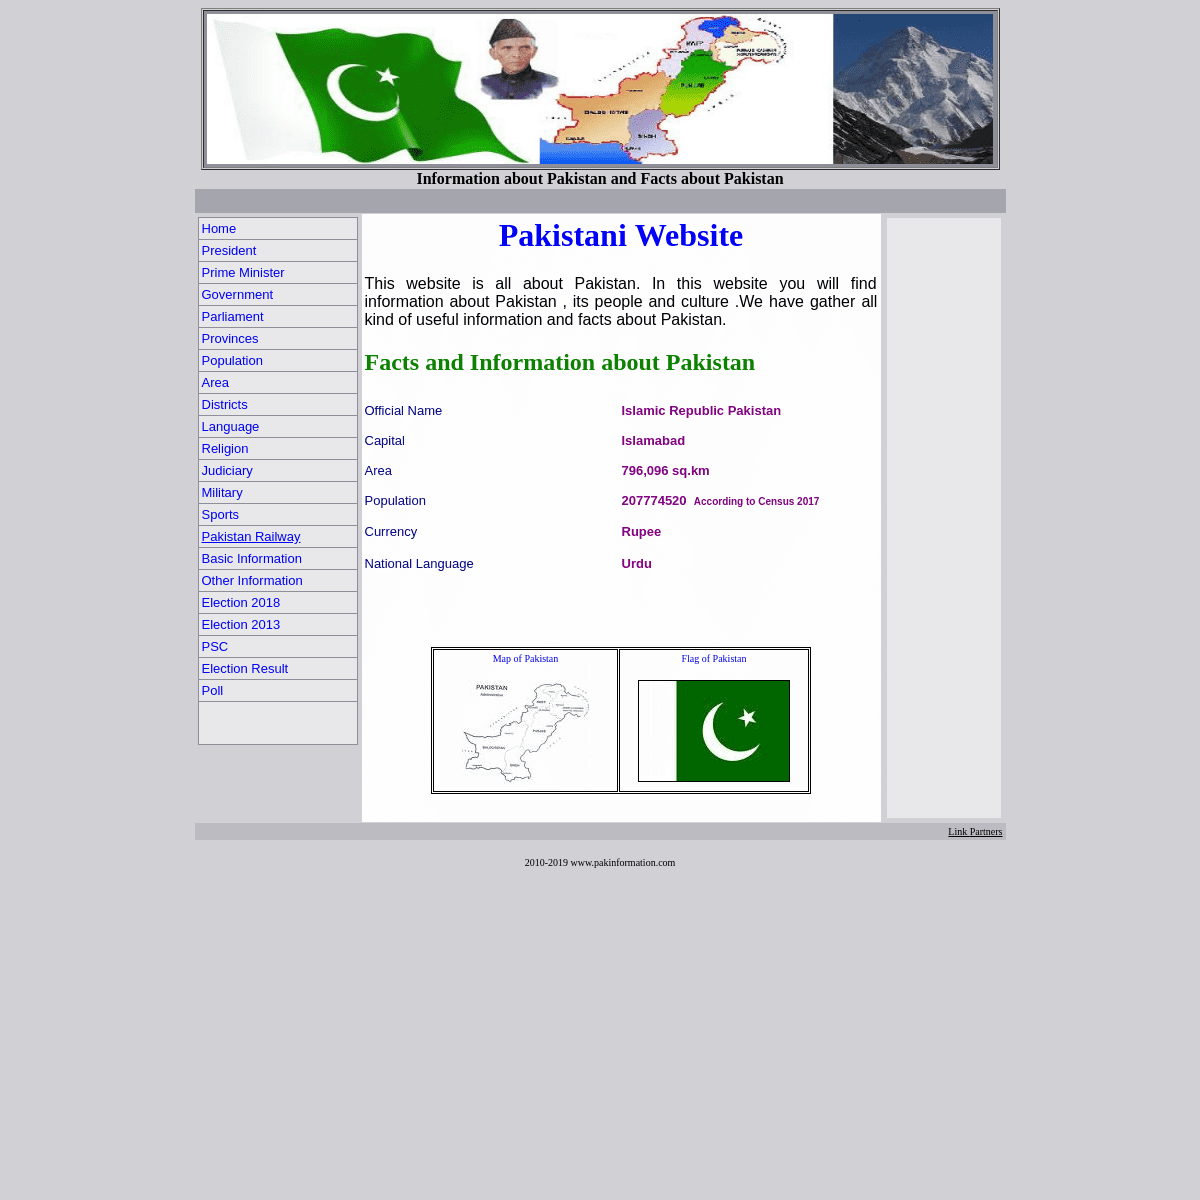 Pakistani Website Information Facts about Pakistan